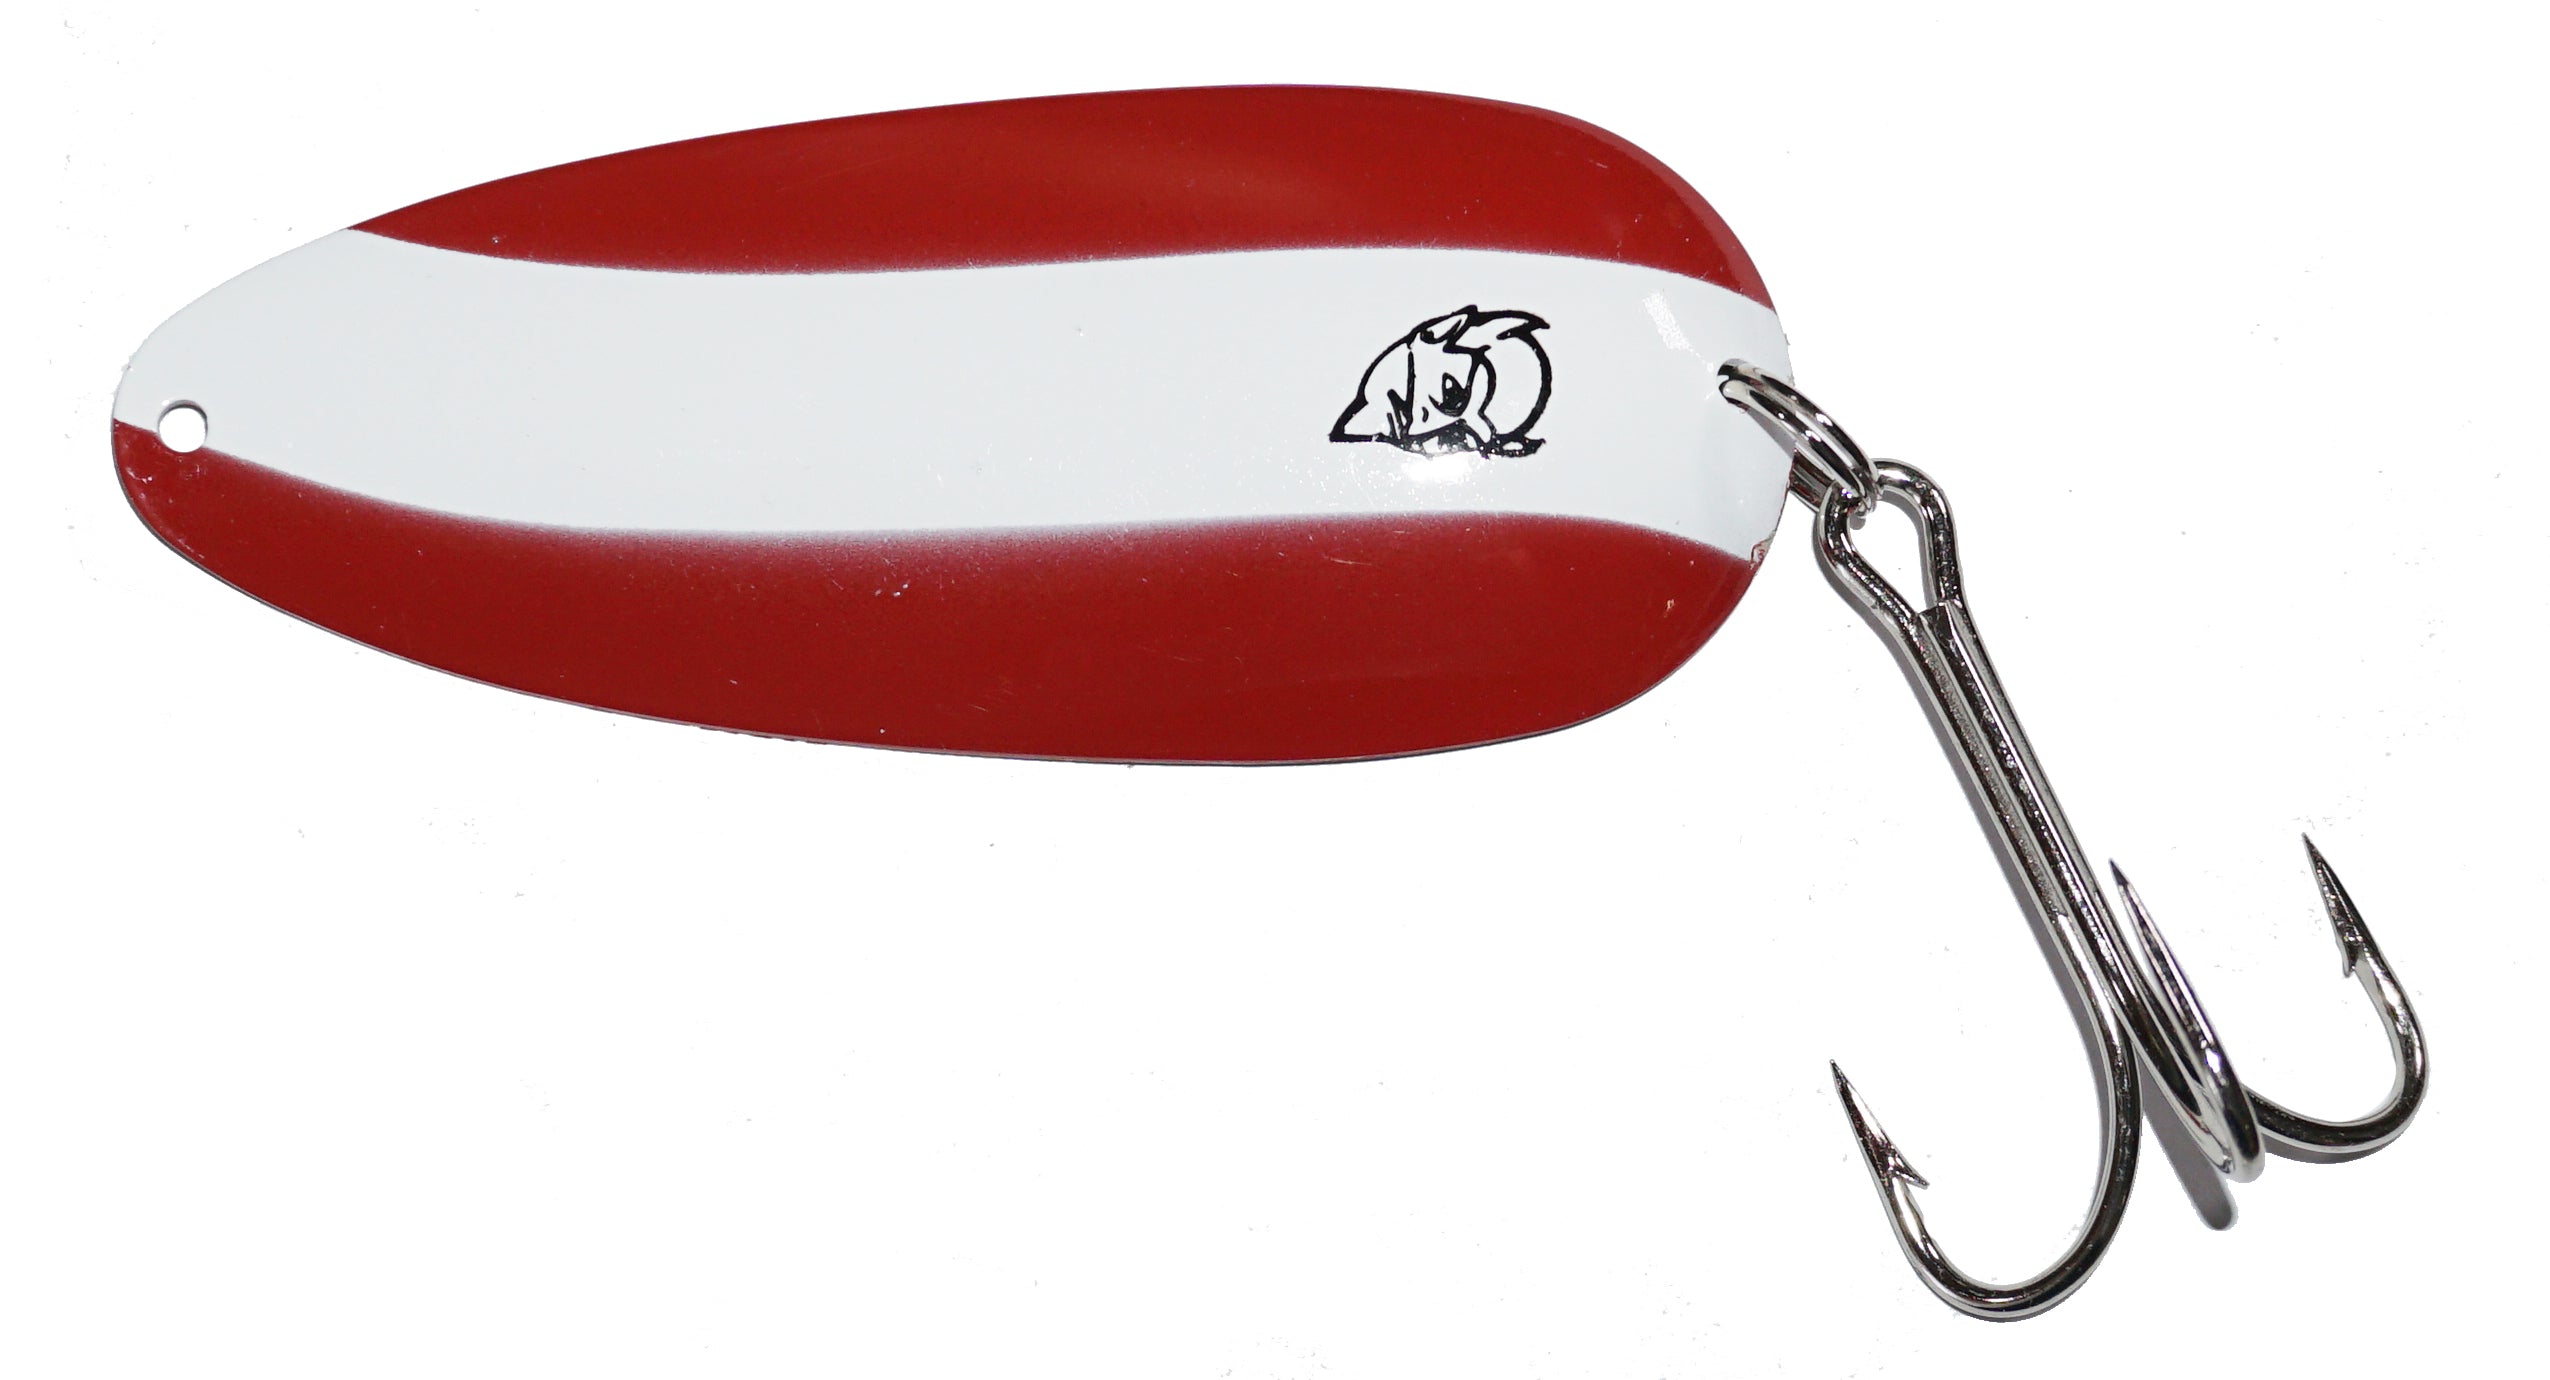  Dardevle Original Dardevle Spoons (Hammered Brass, 1 oz.) : Fishing  Spoons : Sports & Outdoors